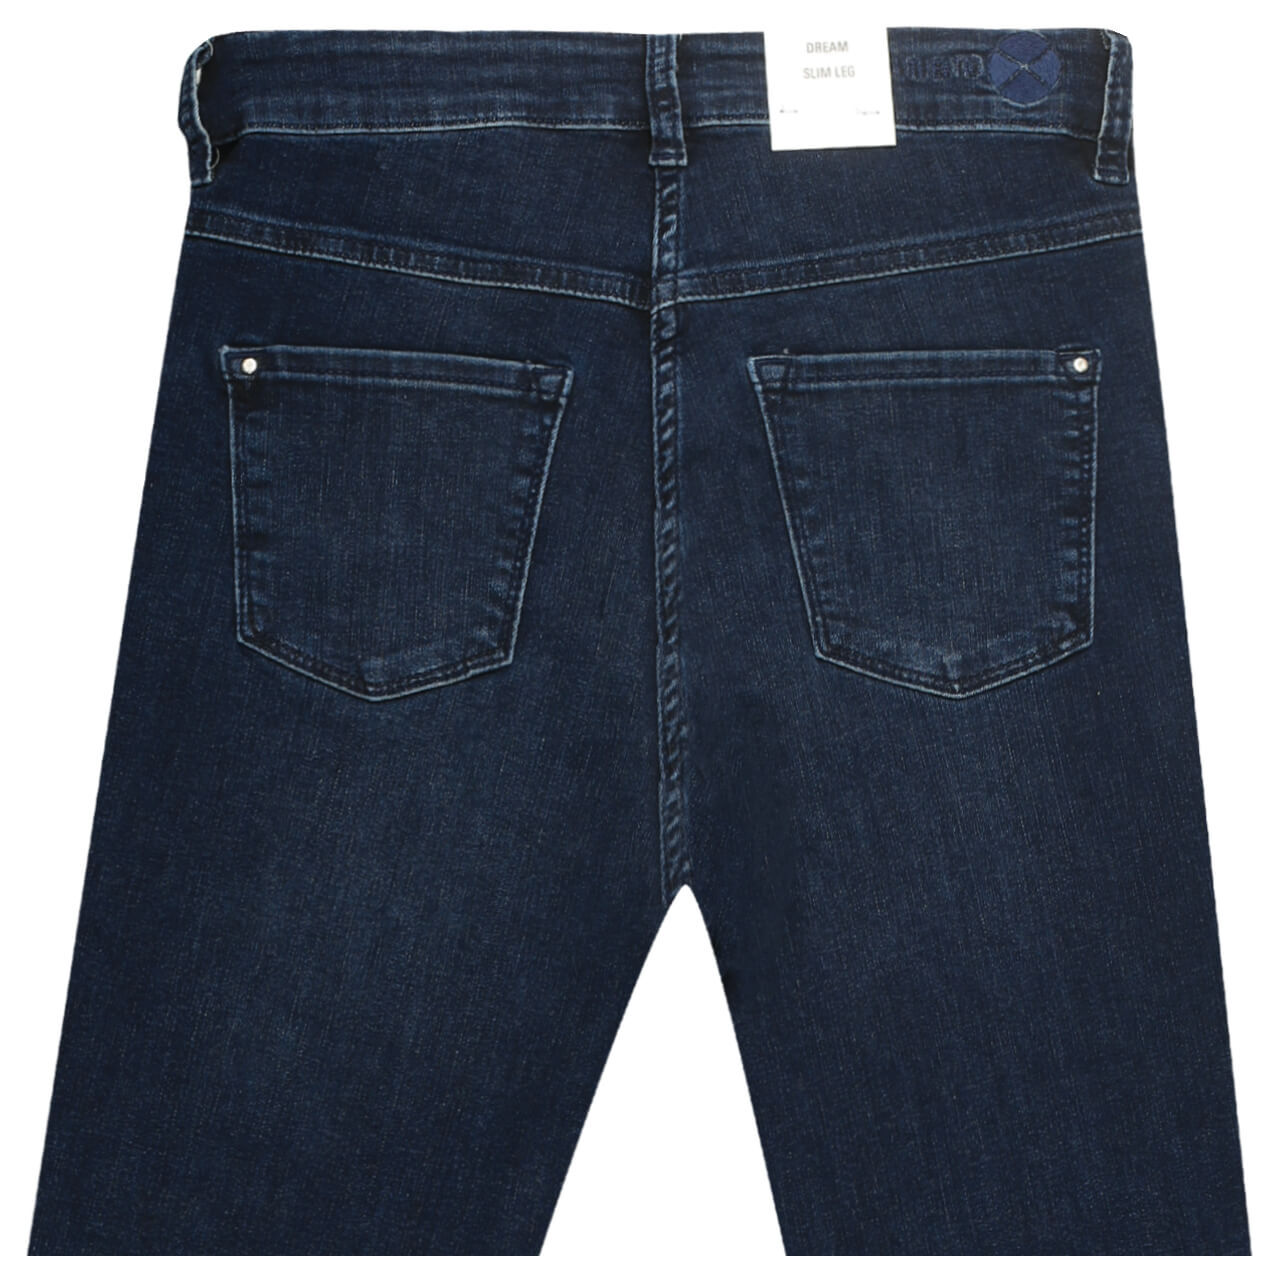 MAC Jeans Dream Slim für Damen in Tiefblau, FarbNr.: D651